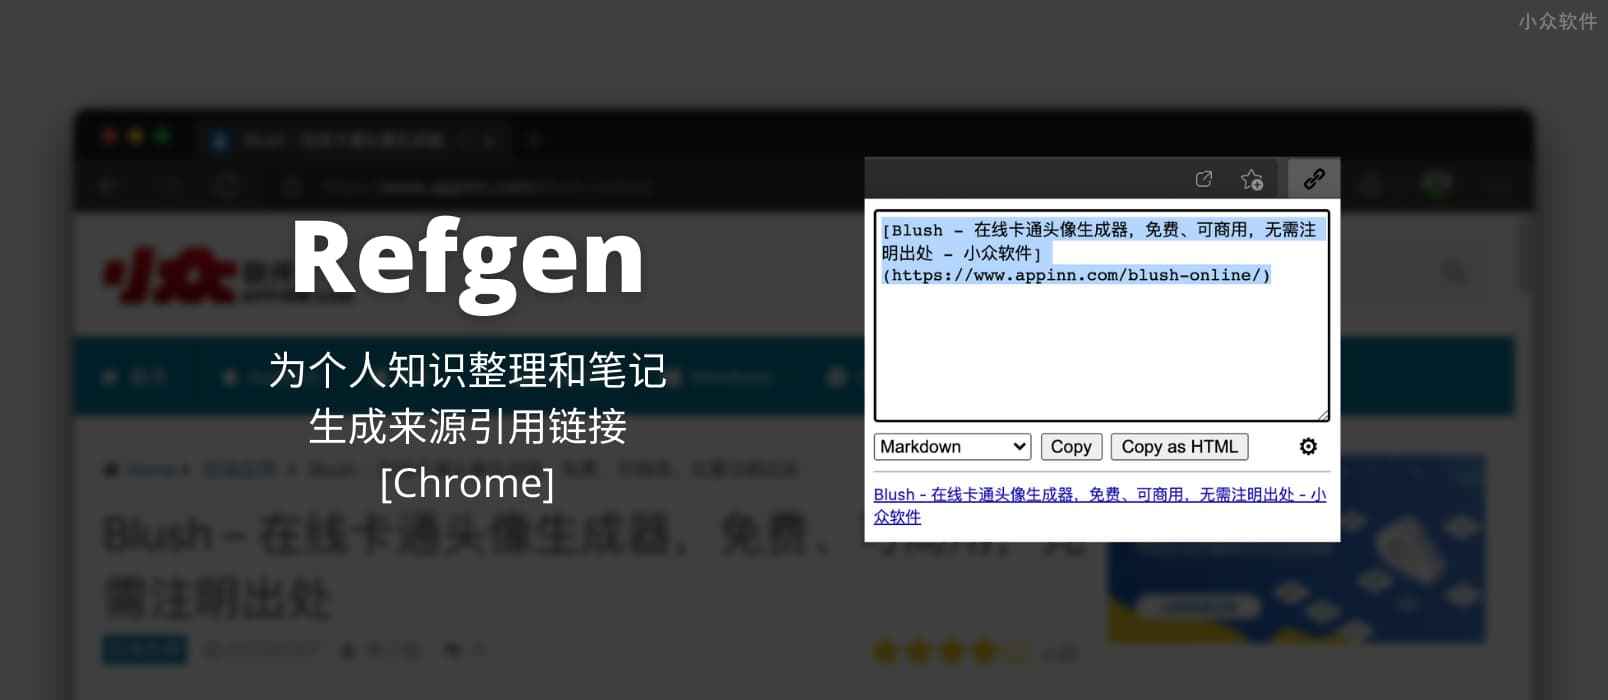 Refgen – 为个人知识整理和笔记生成来源引用链接[Chrome]